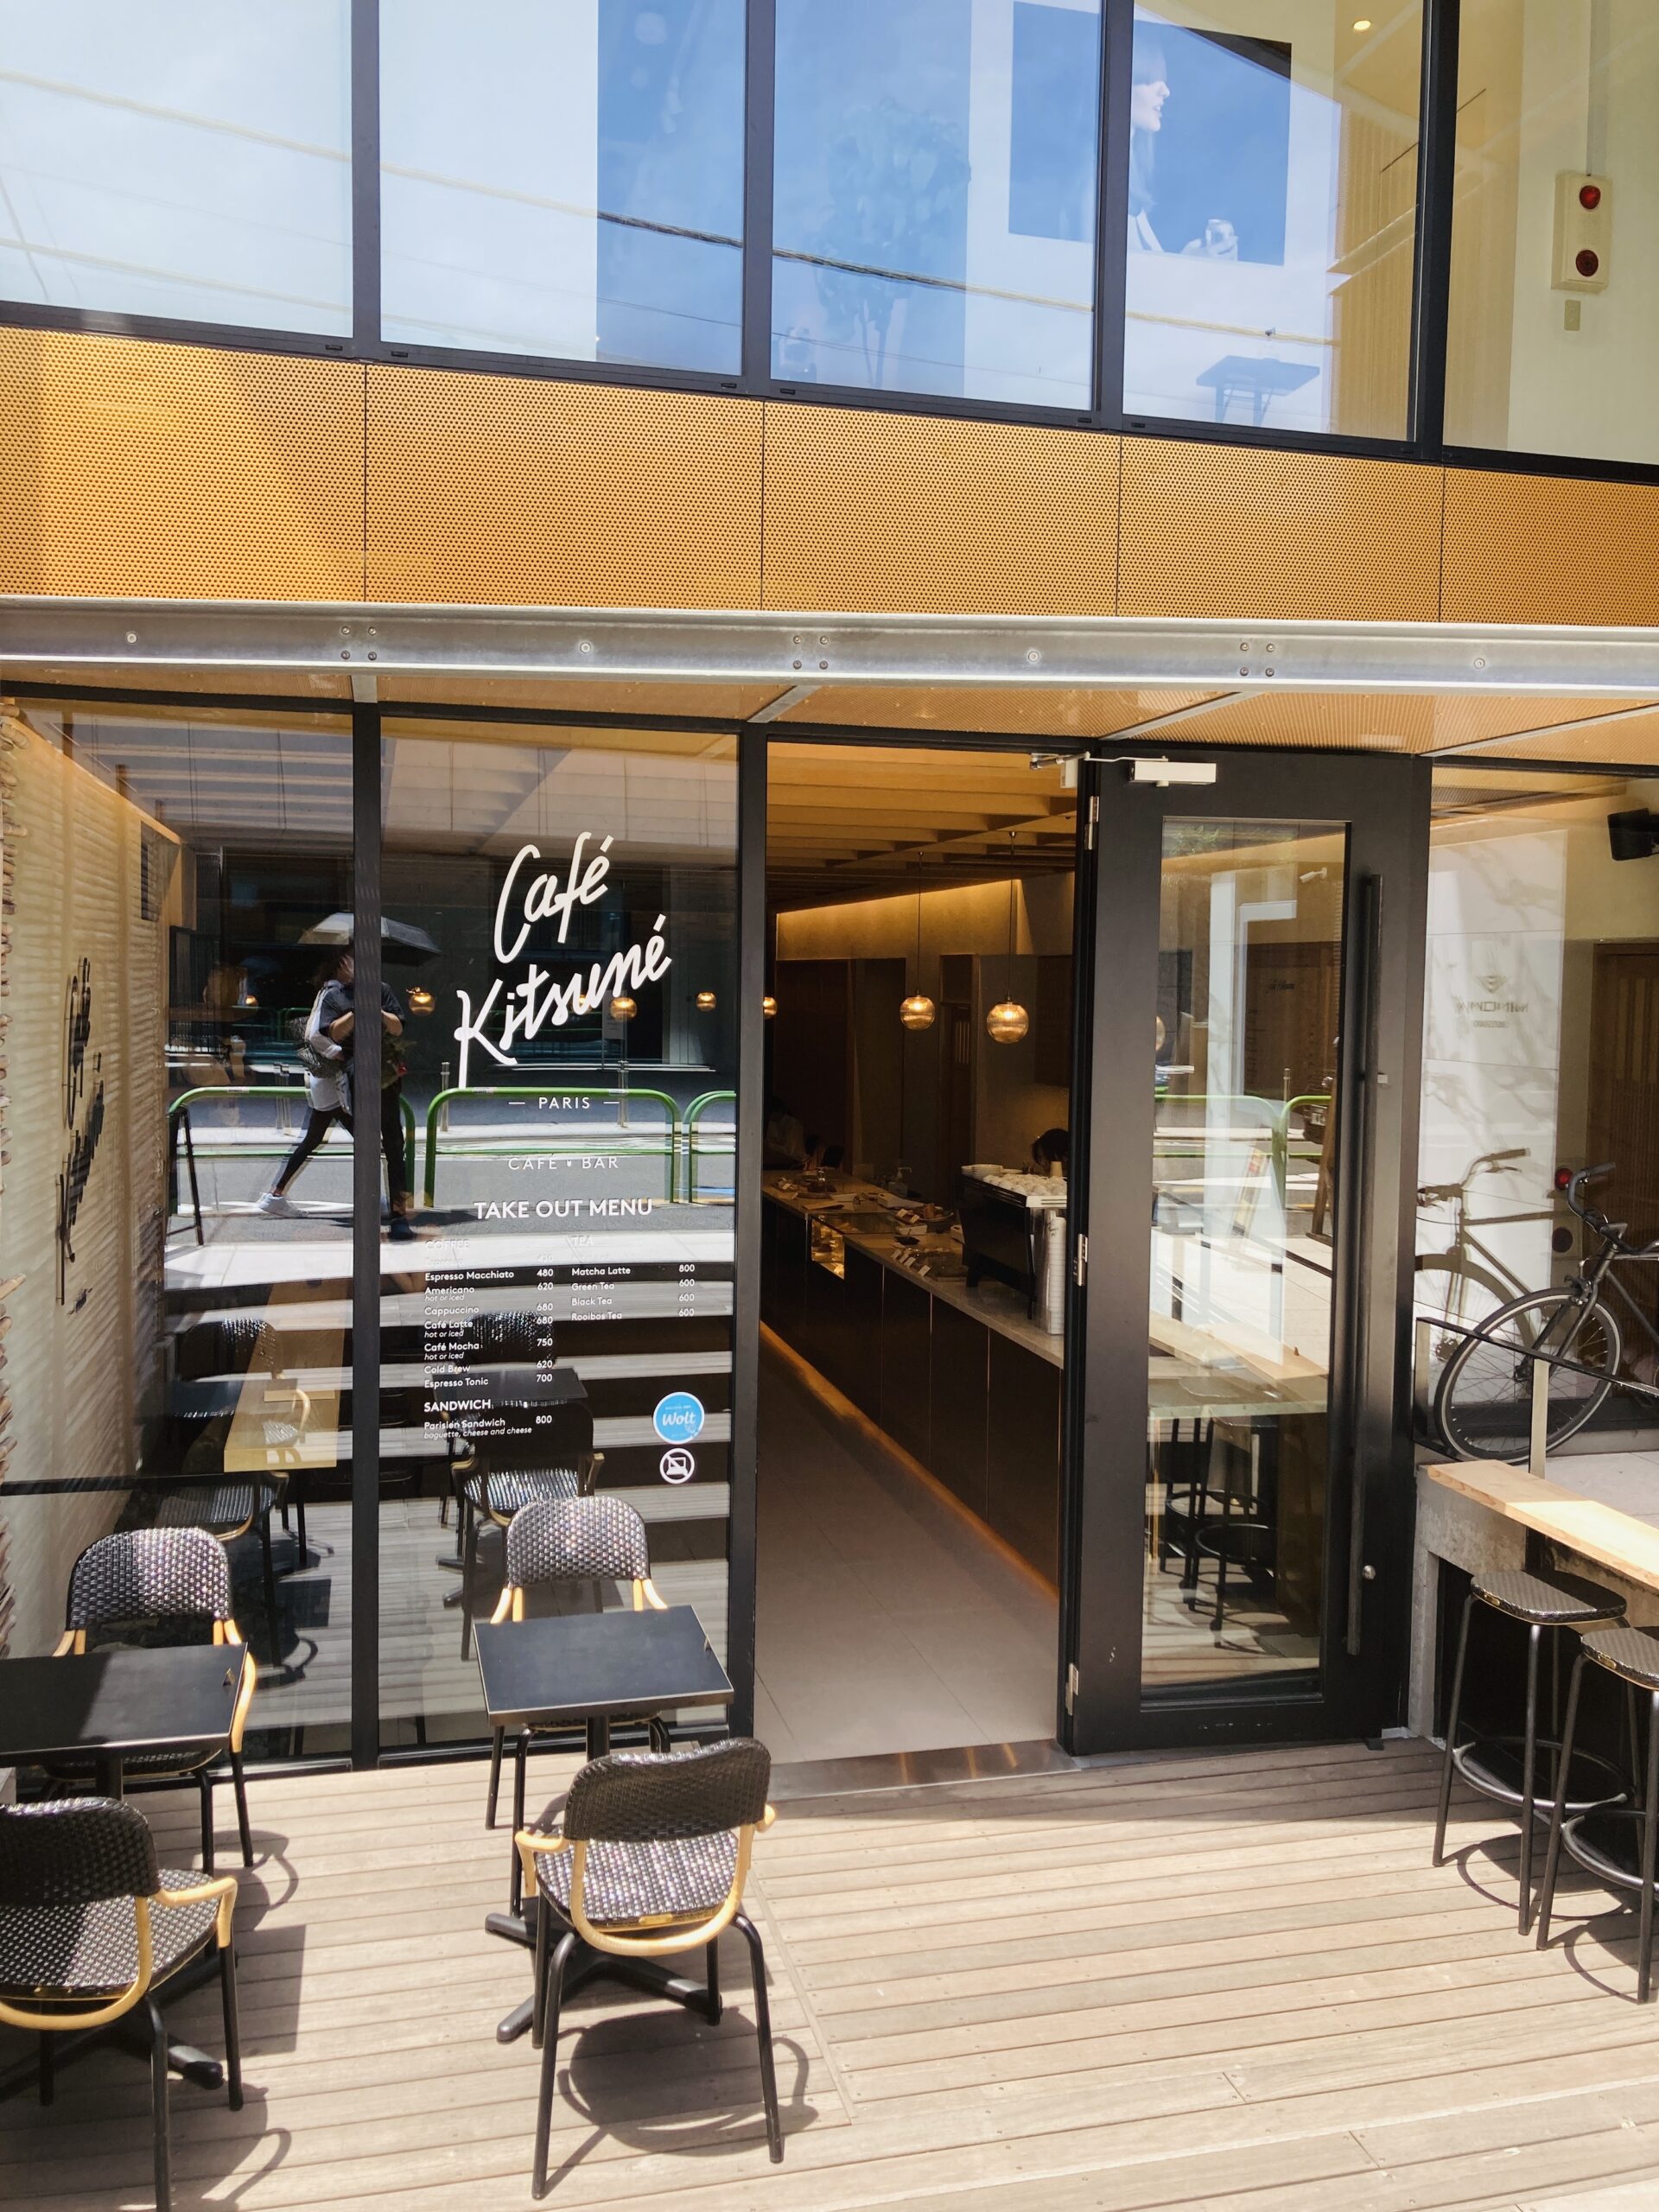 Café Kitsuné Aoyama「カフェ キツネ 青山」―贅沢なティータイムを楽しむなら、この隠れた名所がおすすめです！